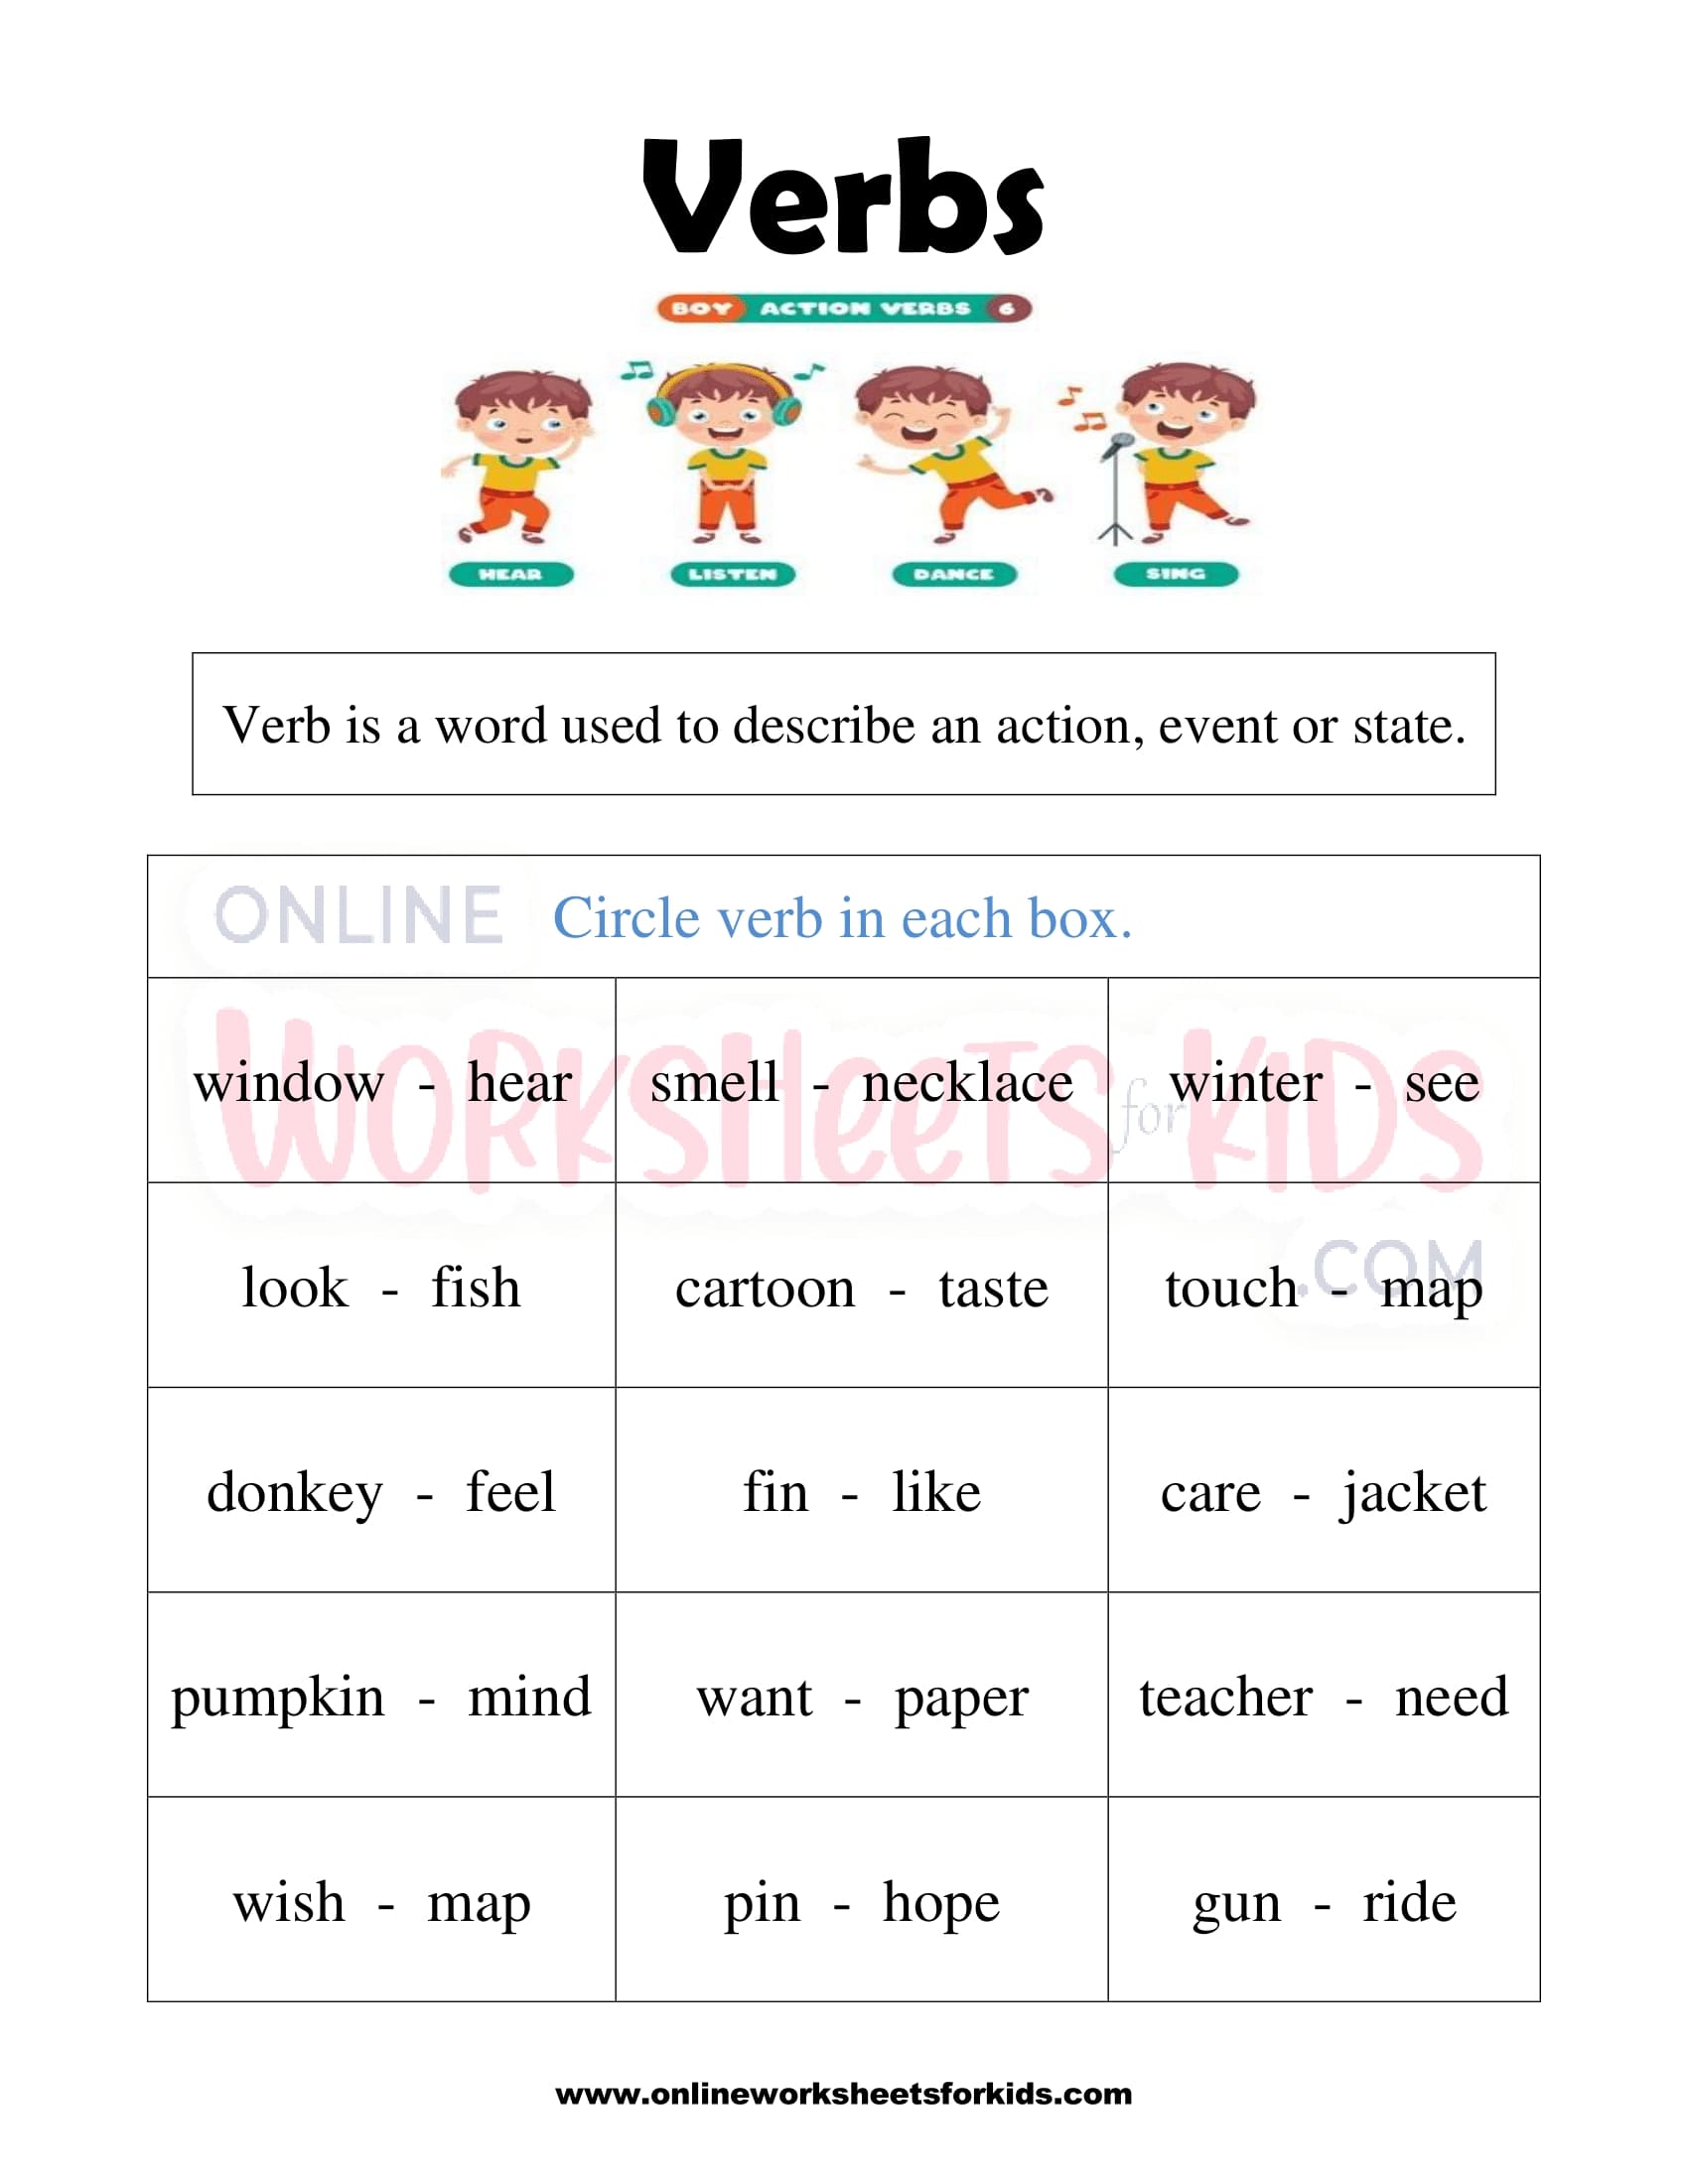 verbs worksheets for grade 1 7